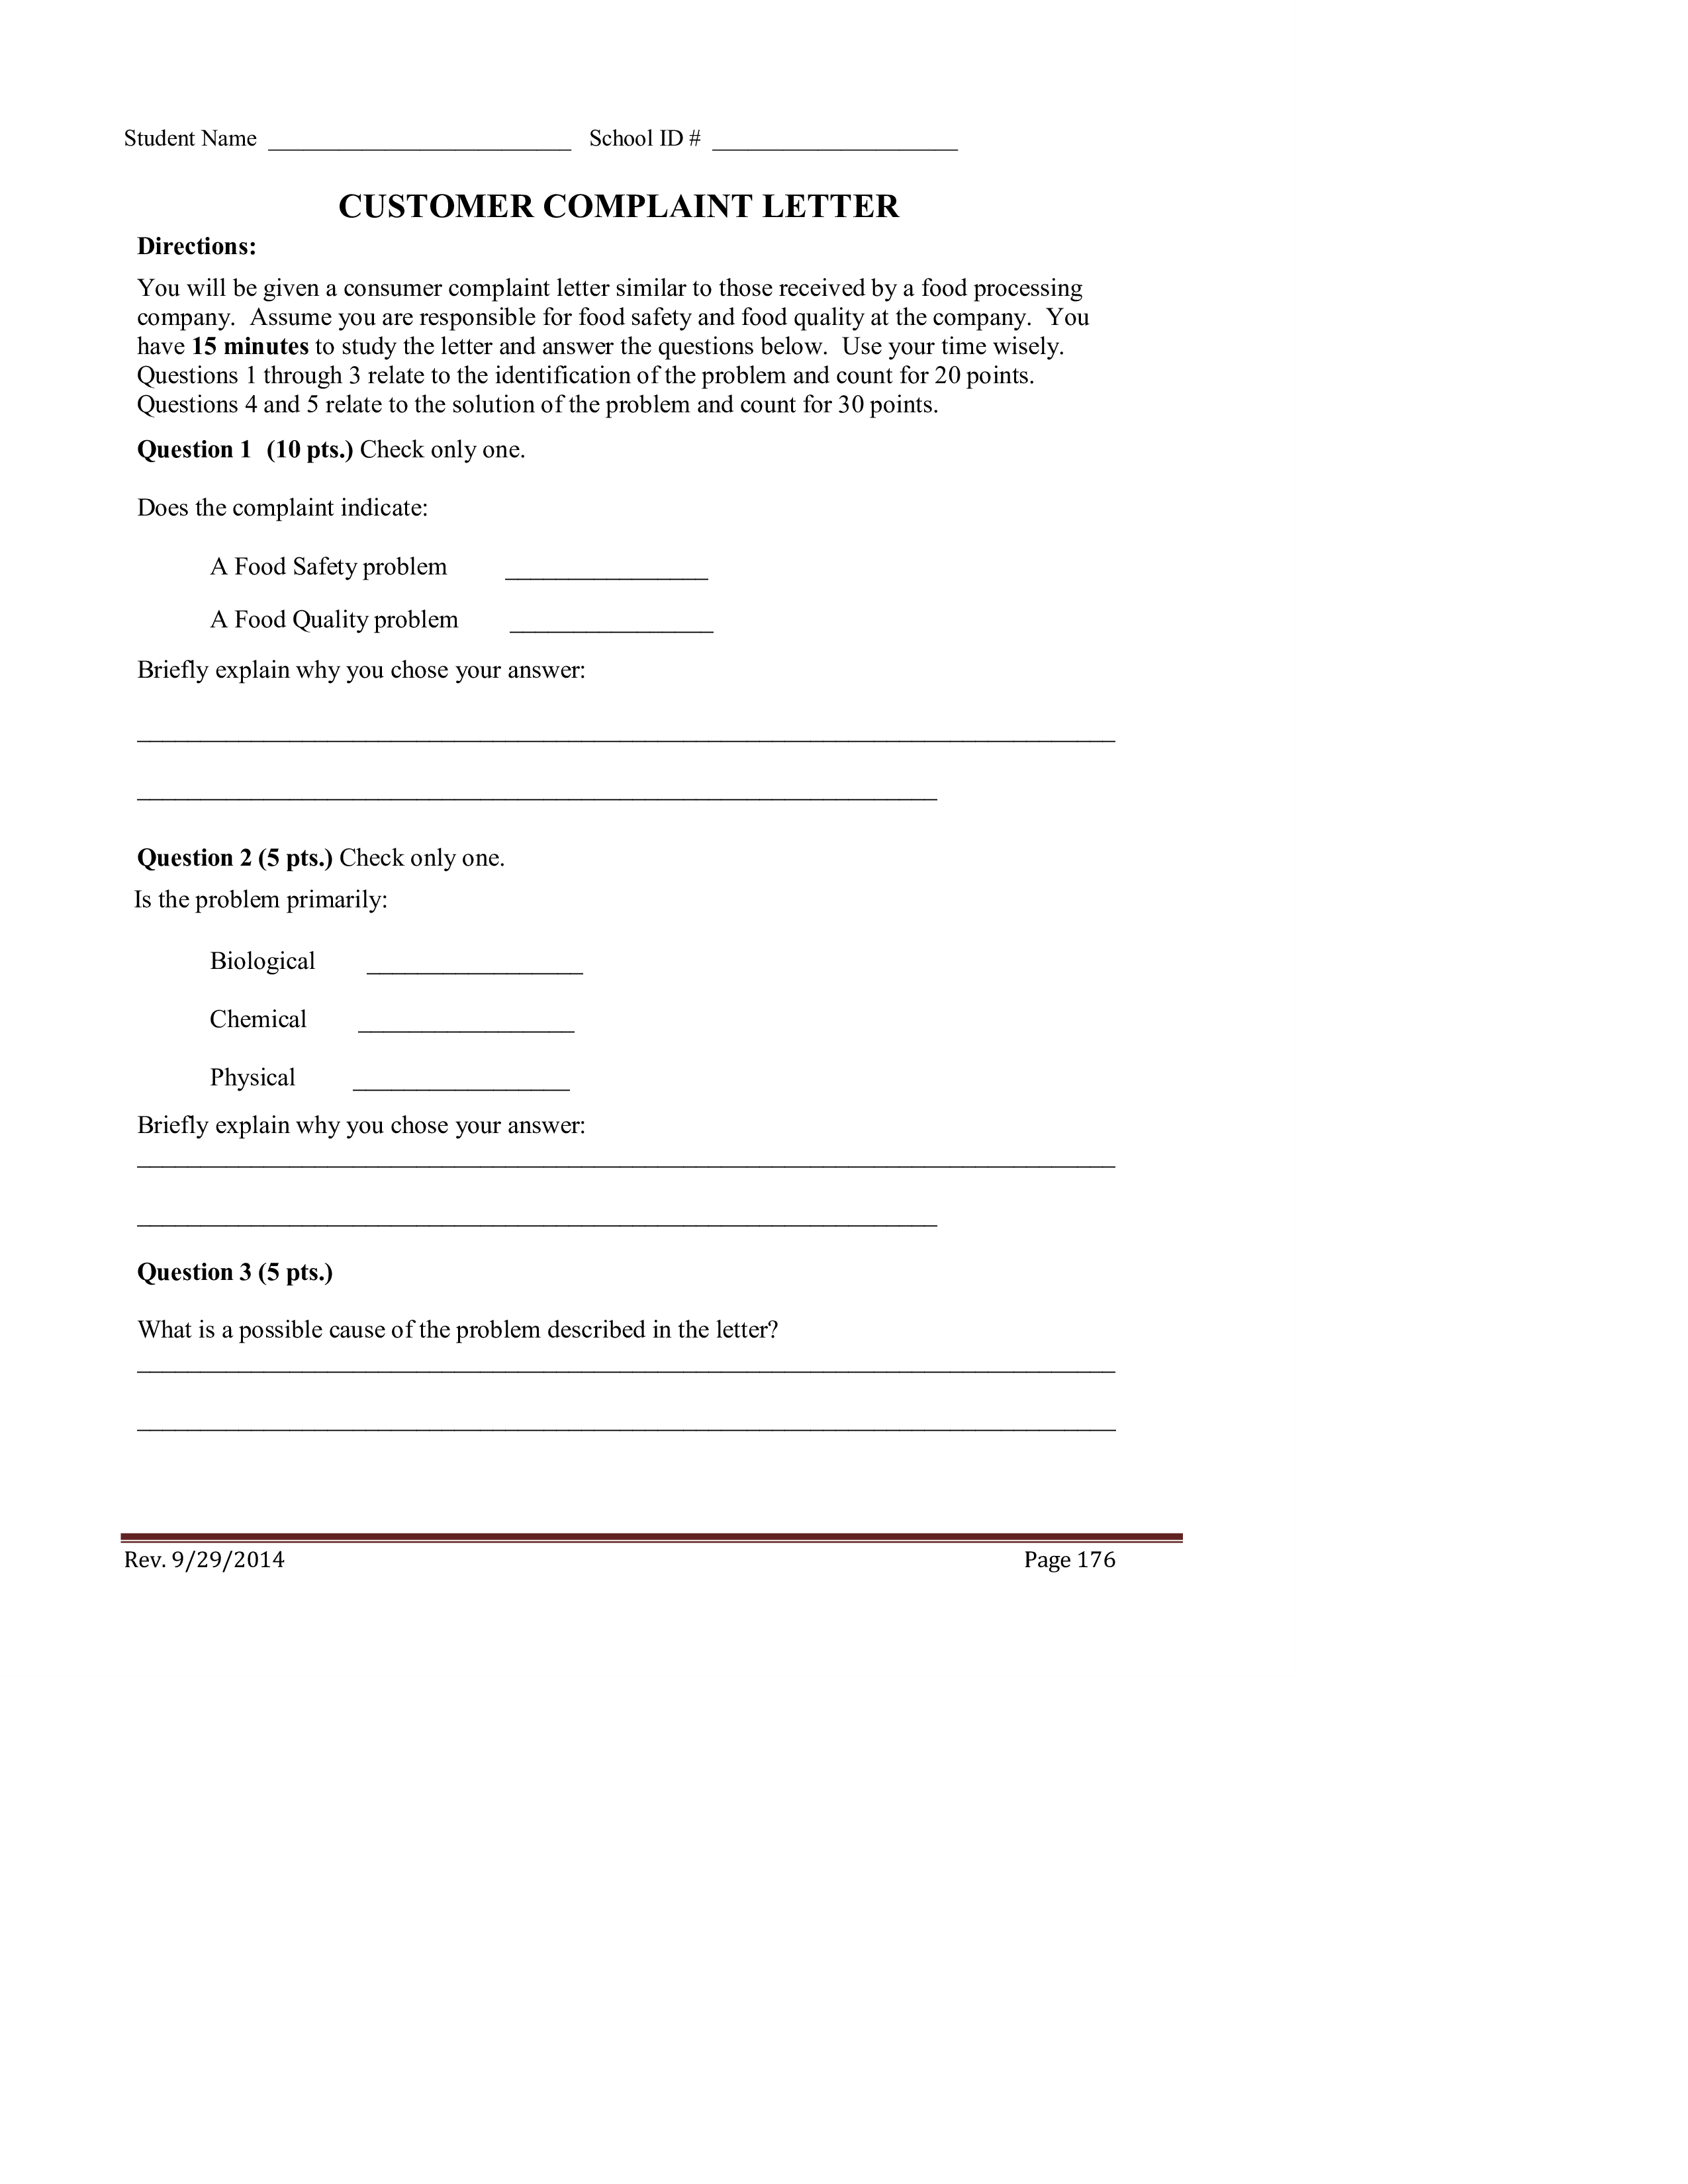 Sample Customer Complaint Letter main image